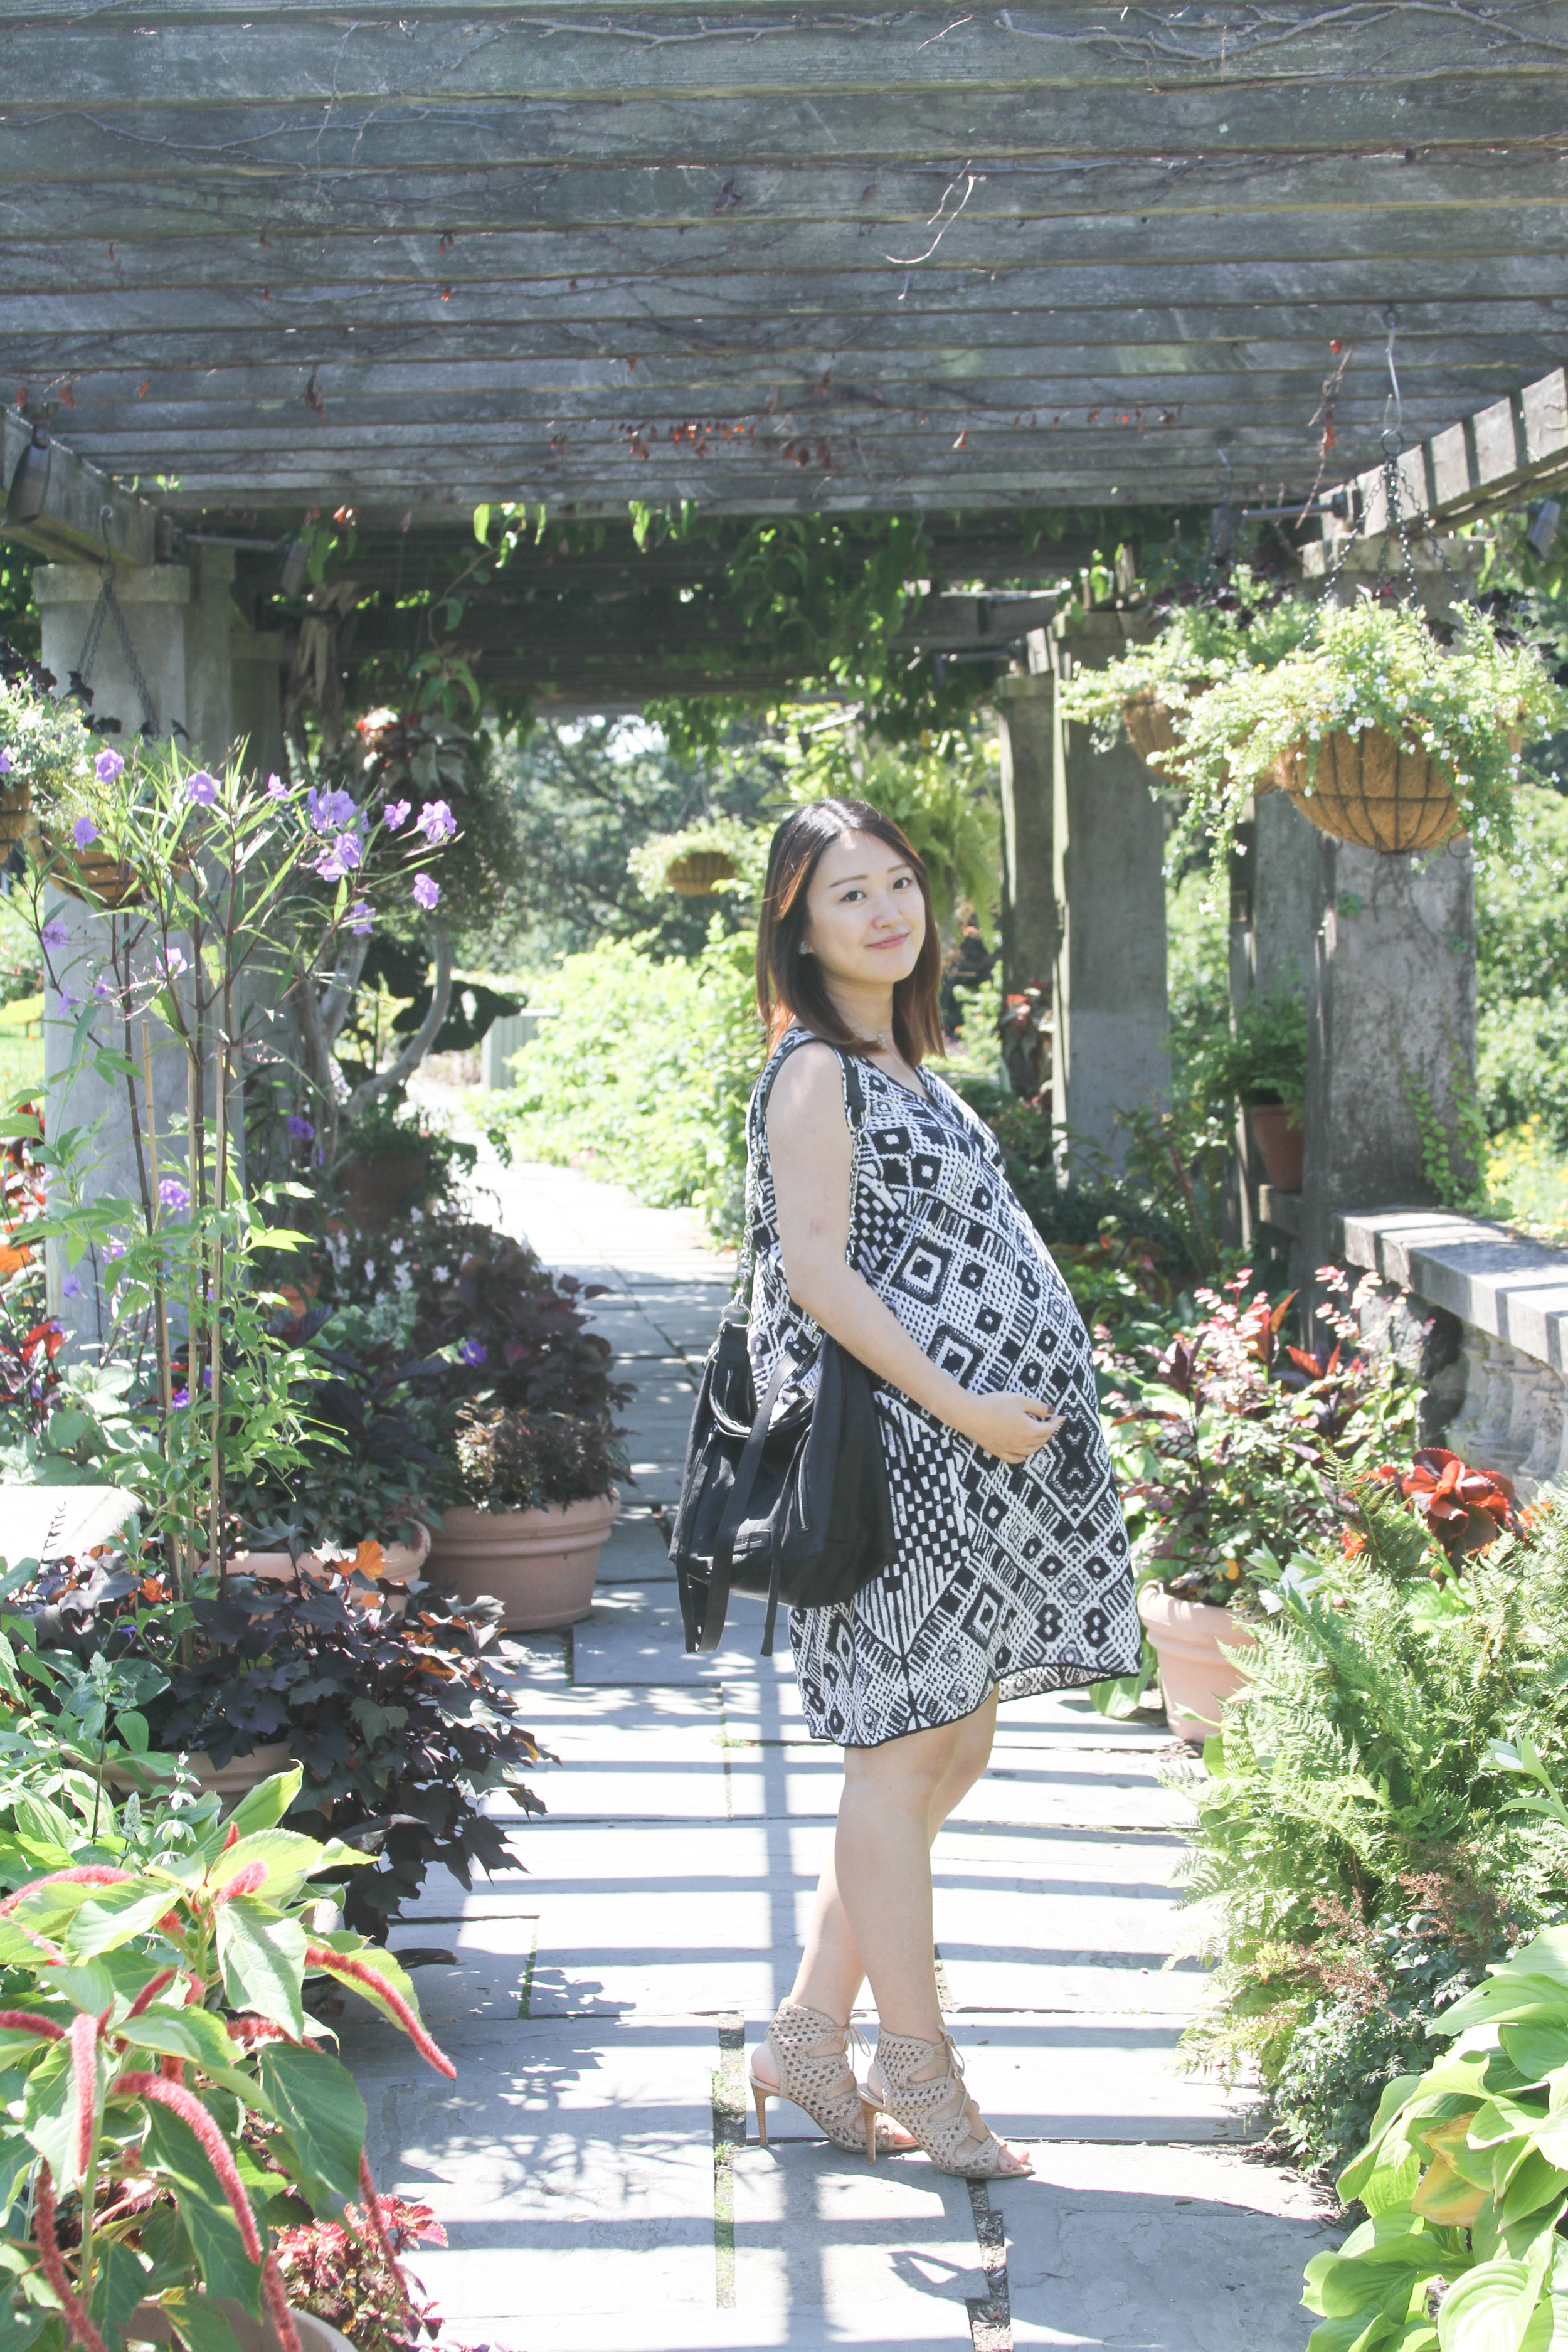 The Bag Lady - The Backyard Gardener - ANR Blogs